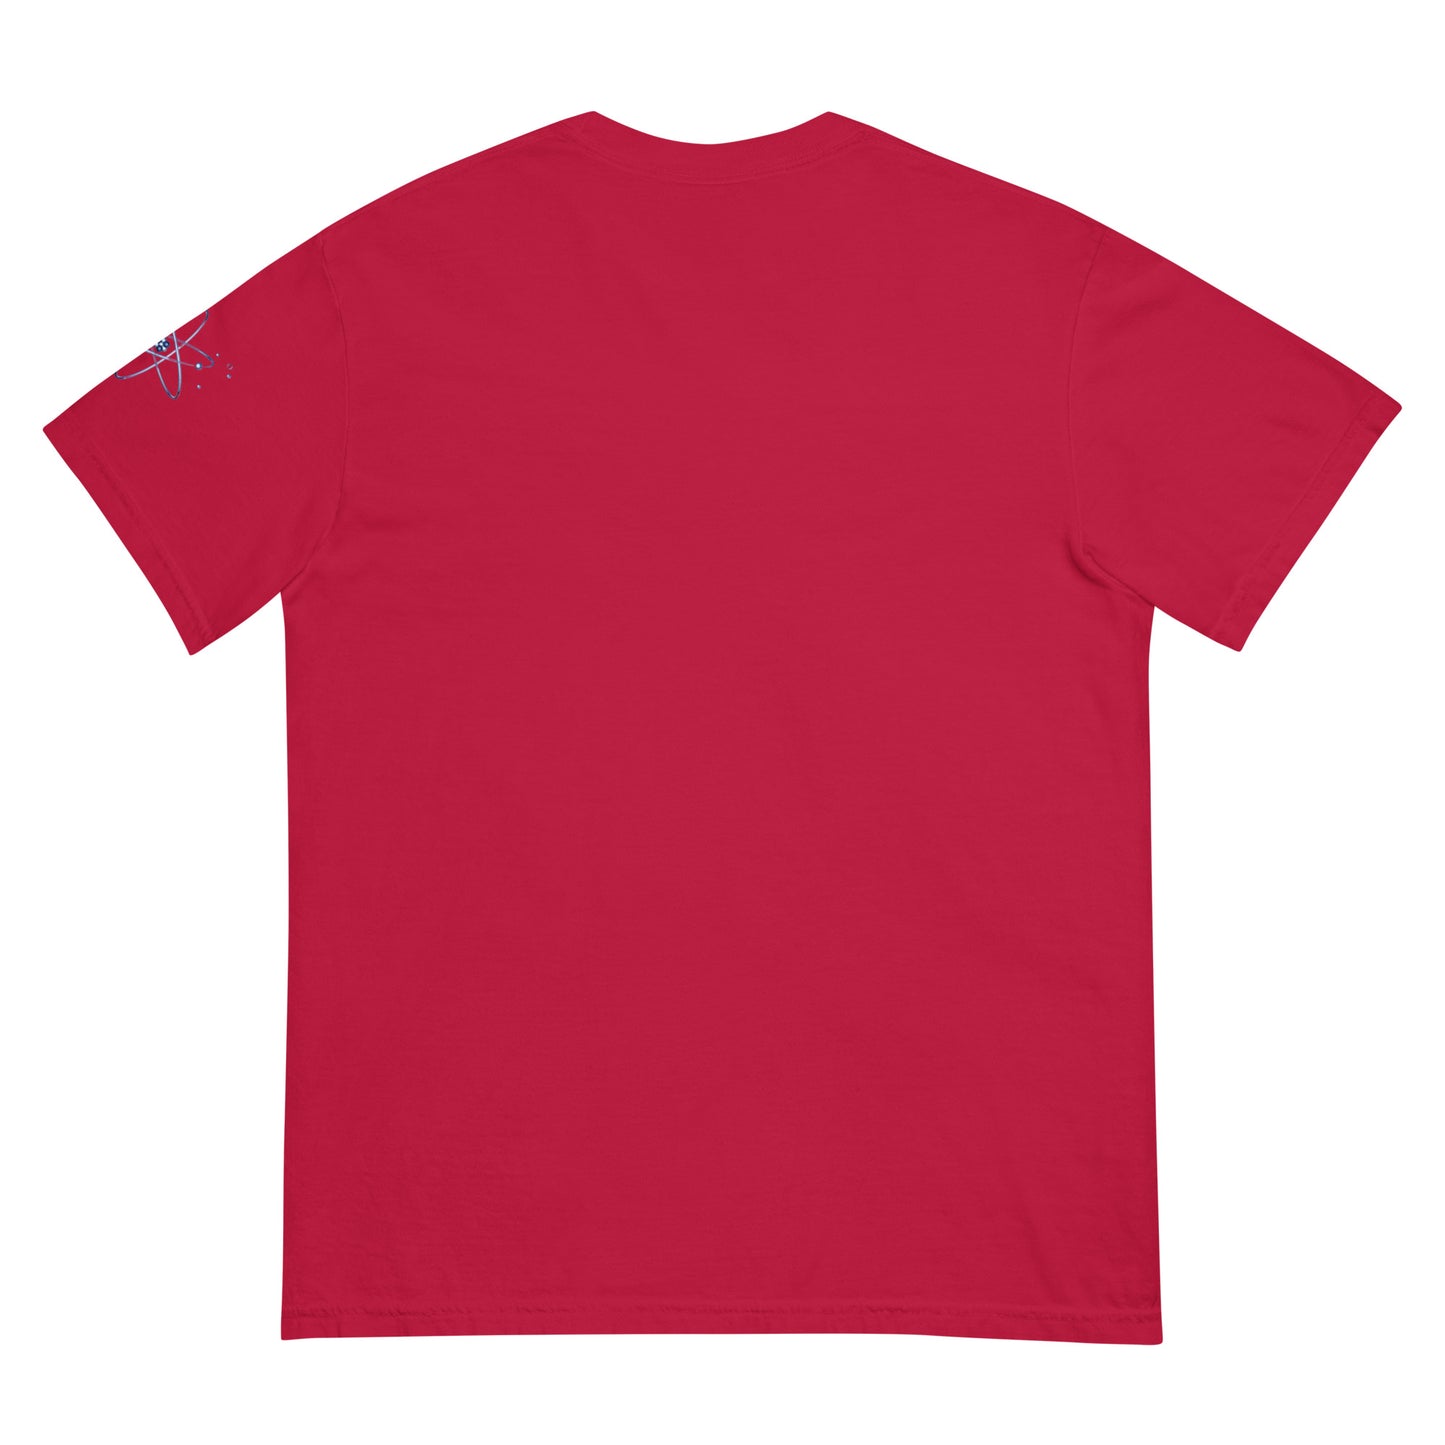 Unisex Peaceful Science garment-dyed heavyweight t-shirt